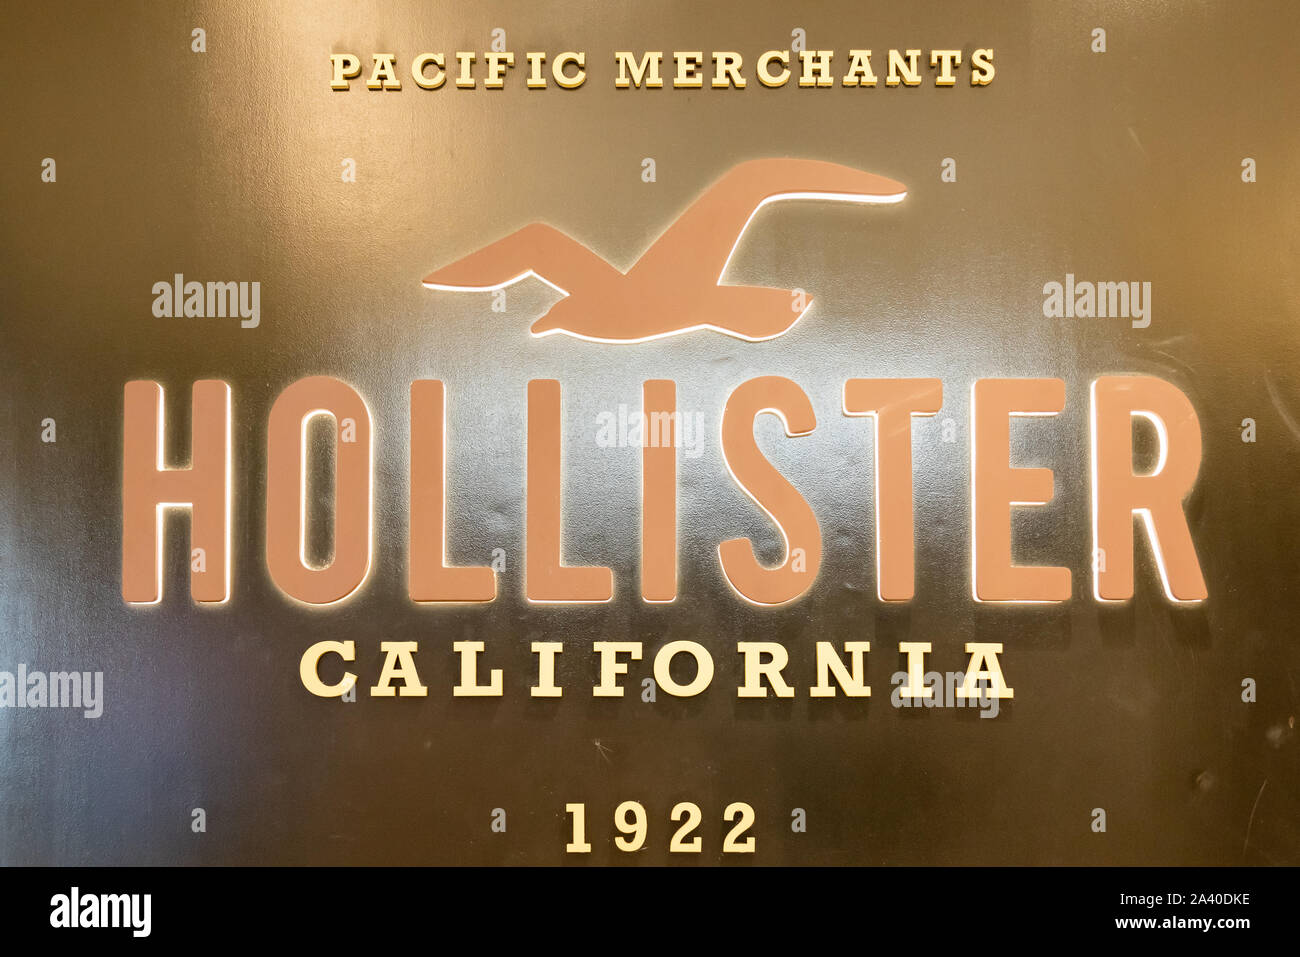 Hollister Co. - Summerlin